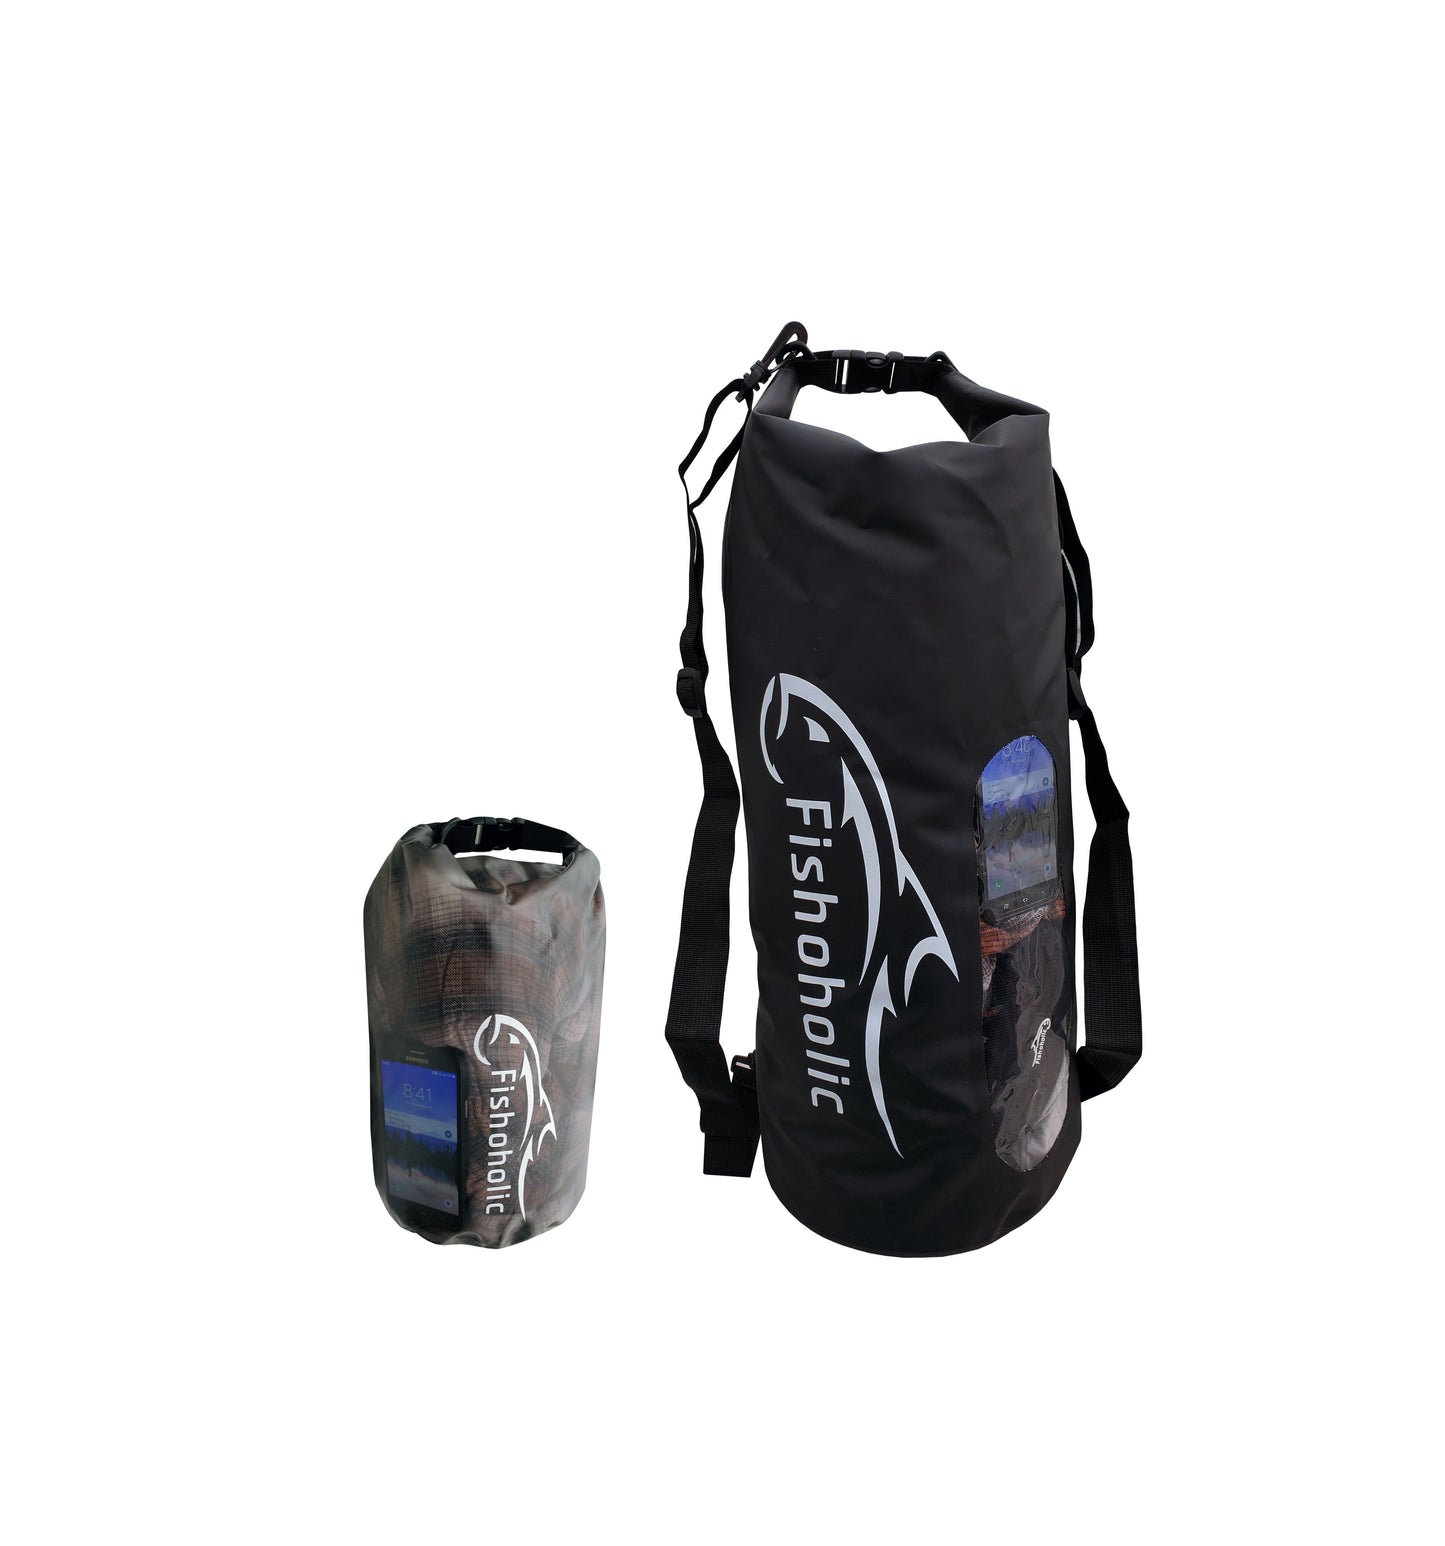 Fishoholic 5L Dry Bag - Semi-Clear Waterproof Gear Bags - Fail-Safe Snap -  Tough & Durable